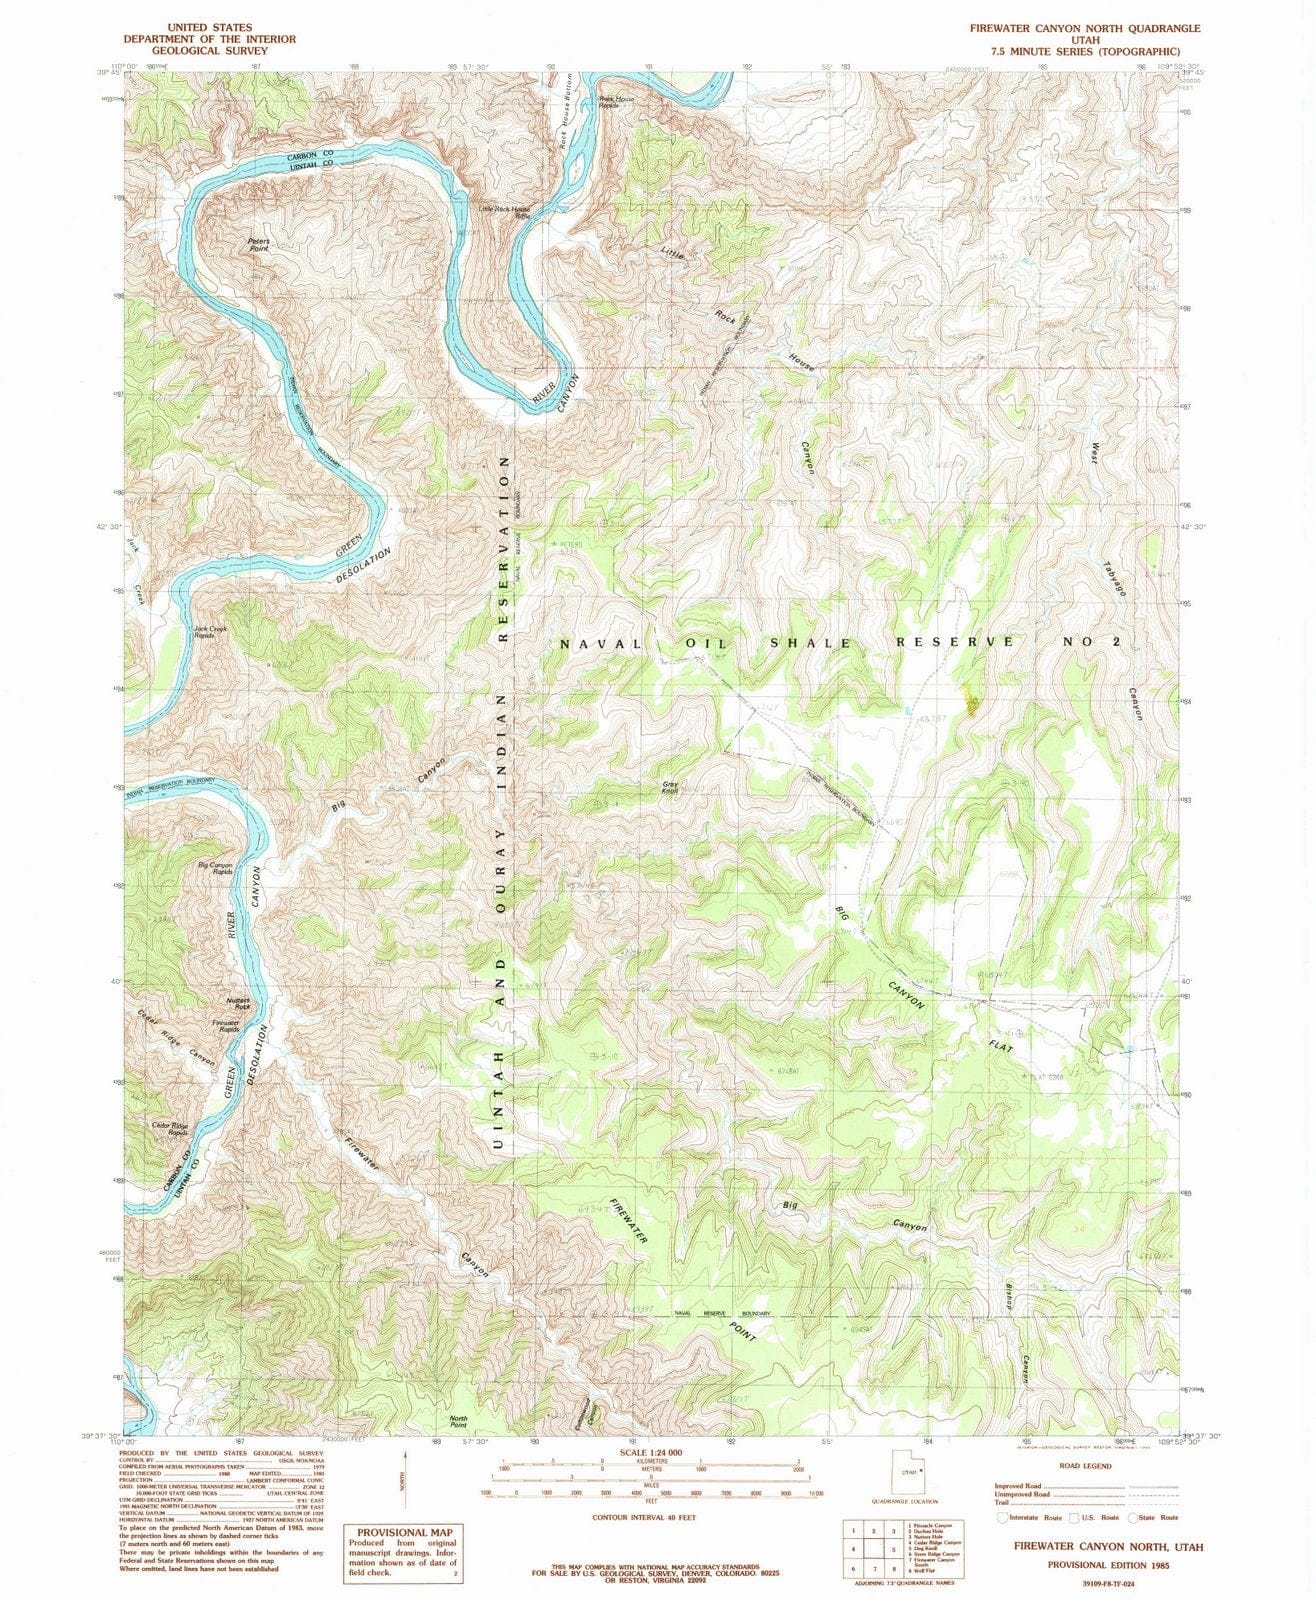 1985 Firewater Canyon North, UT - Utah - USGS Topographic Map